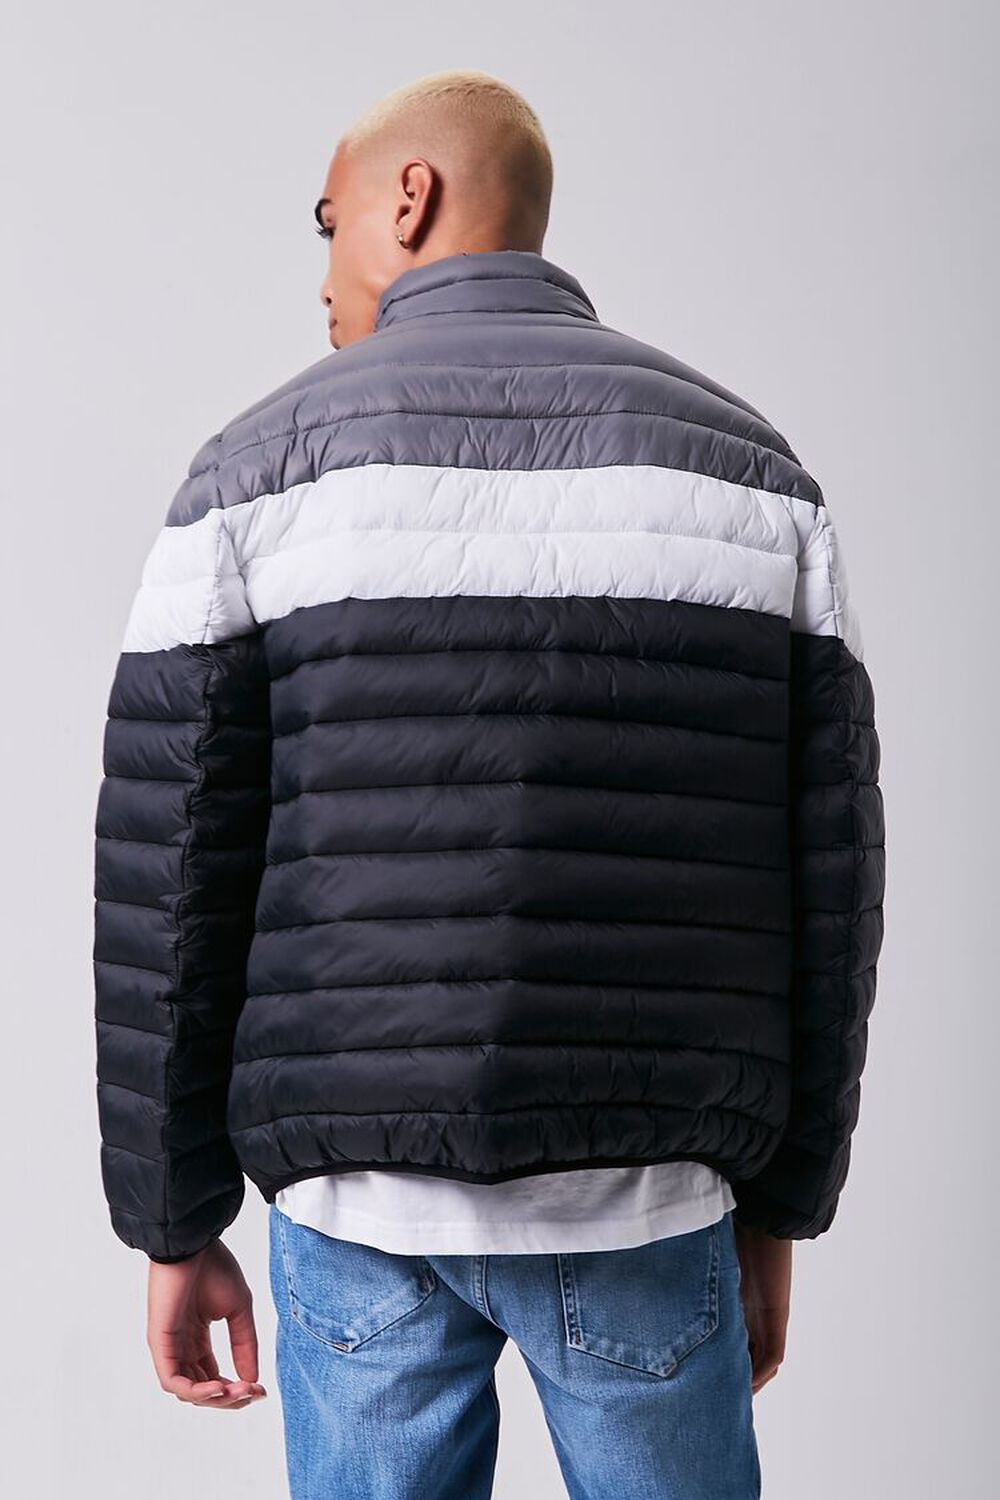 BLACK/CHARCOAL Colorblock Zip-Up Puffer Jacket, image 3